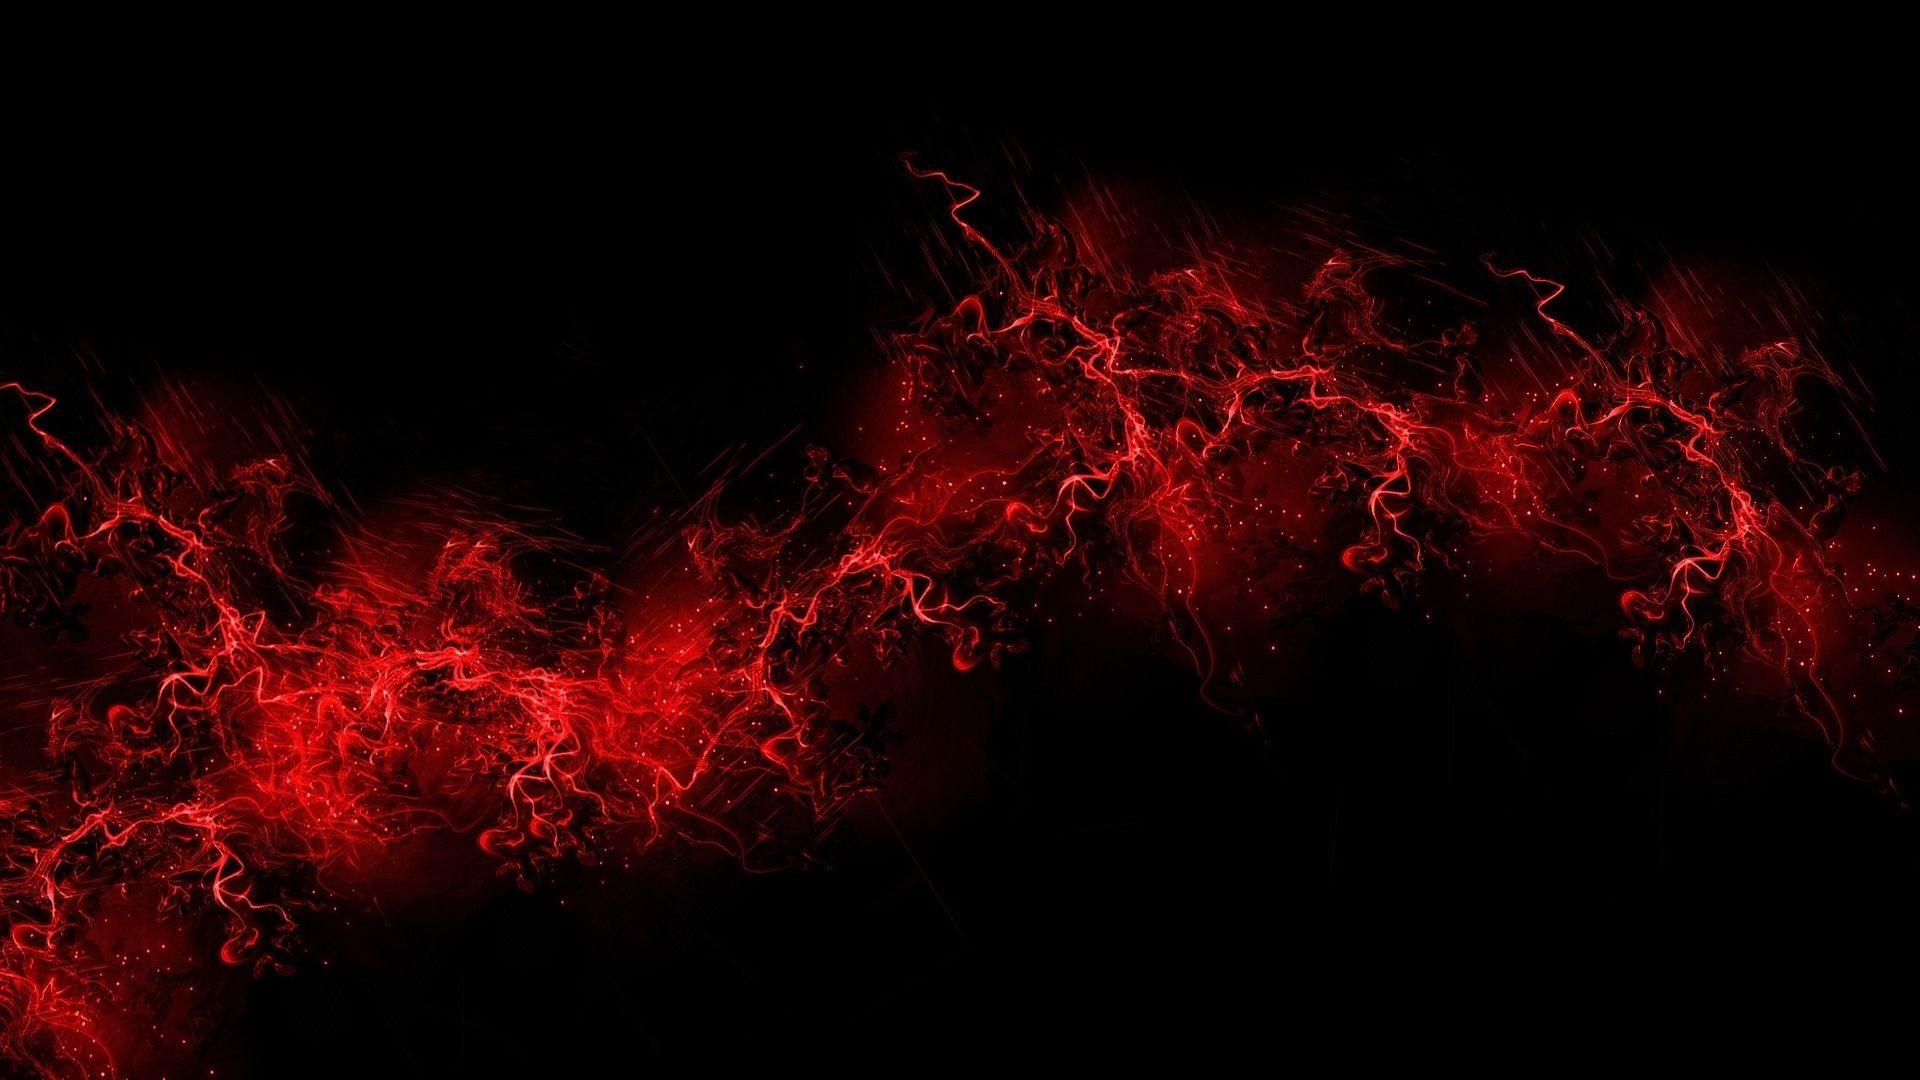 Dark Red Aesthetic Desktop Wallpapers Top Free Dark Red Aesthetic Desktop Backgrounds Wallpaperaccess